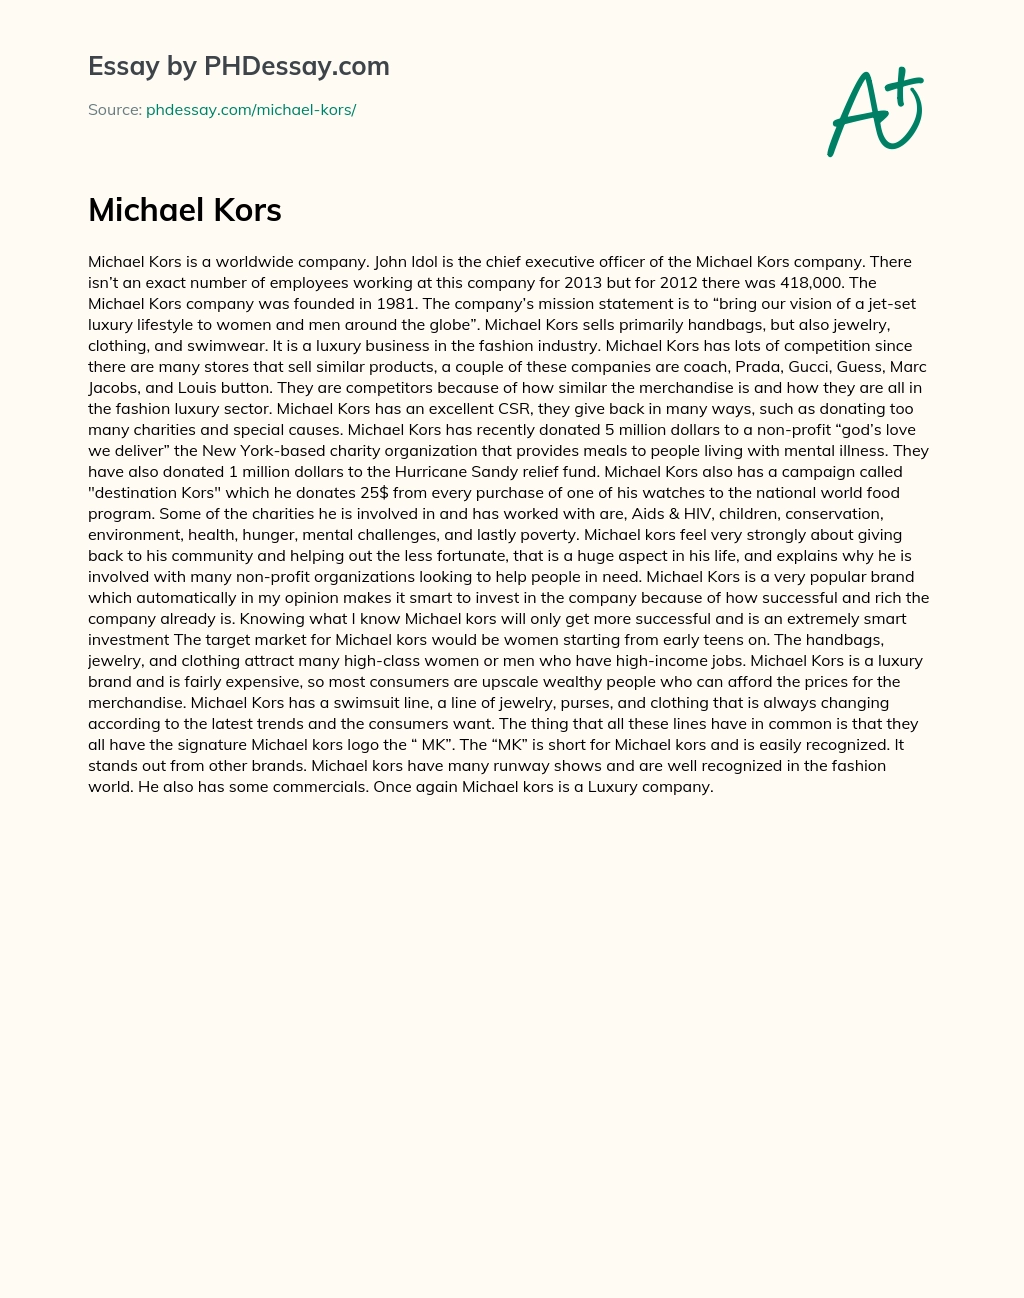 Michael Kors essay